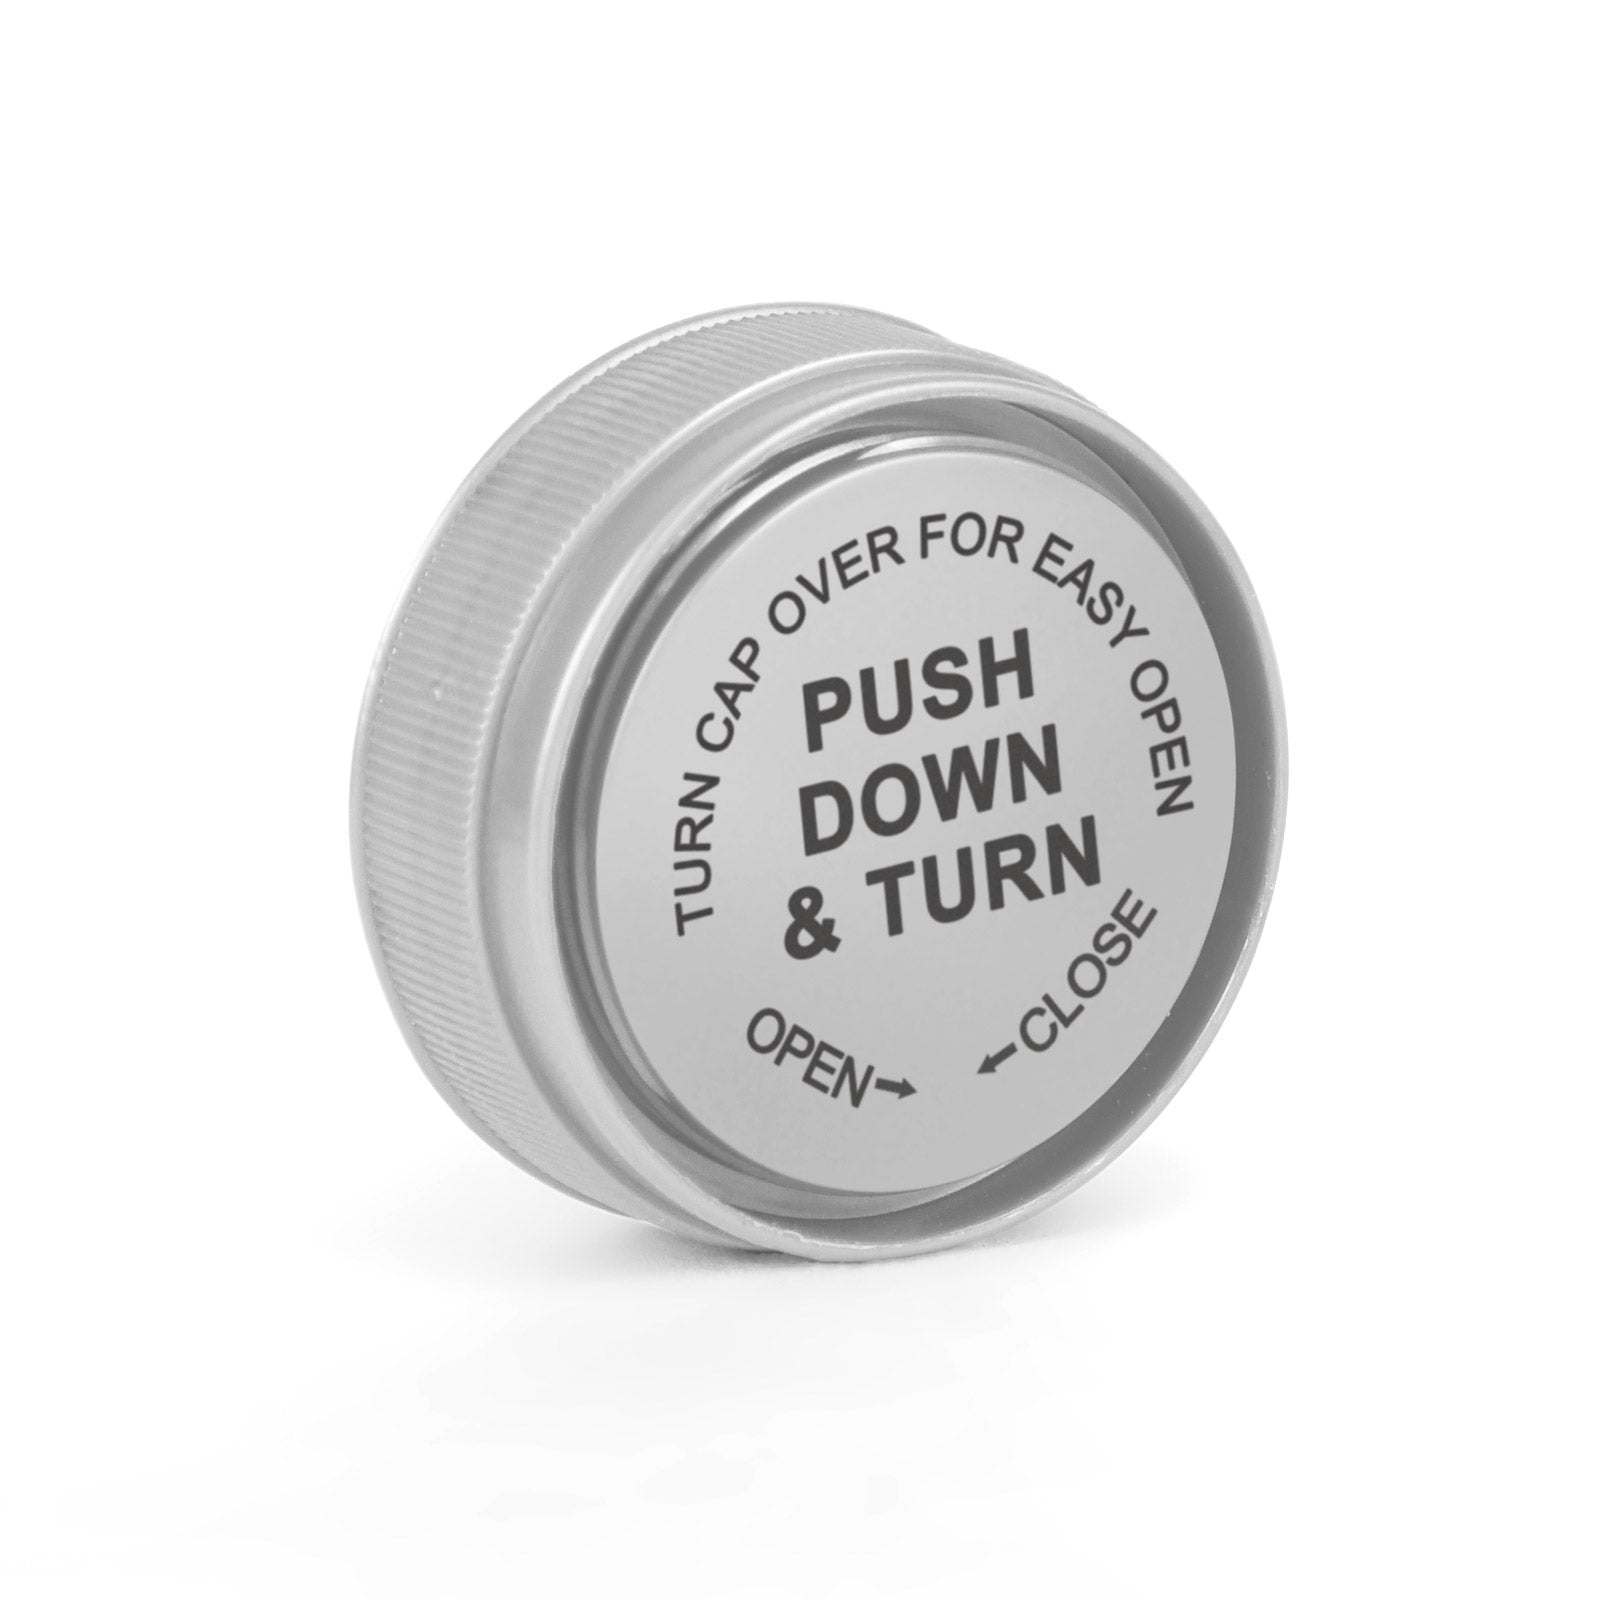 30 Dram Reversible Cap Opaque Silver - 1 Count